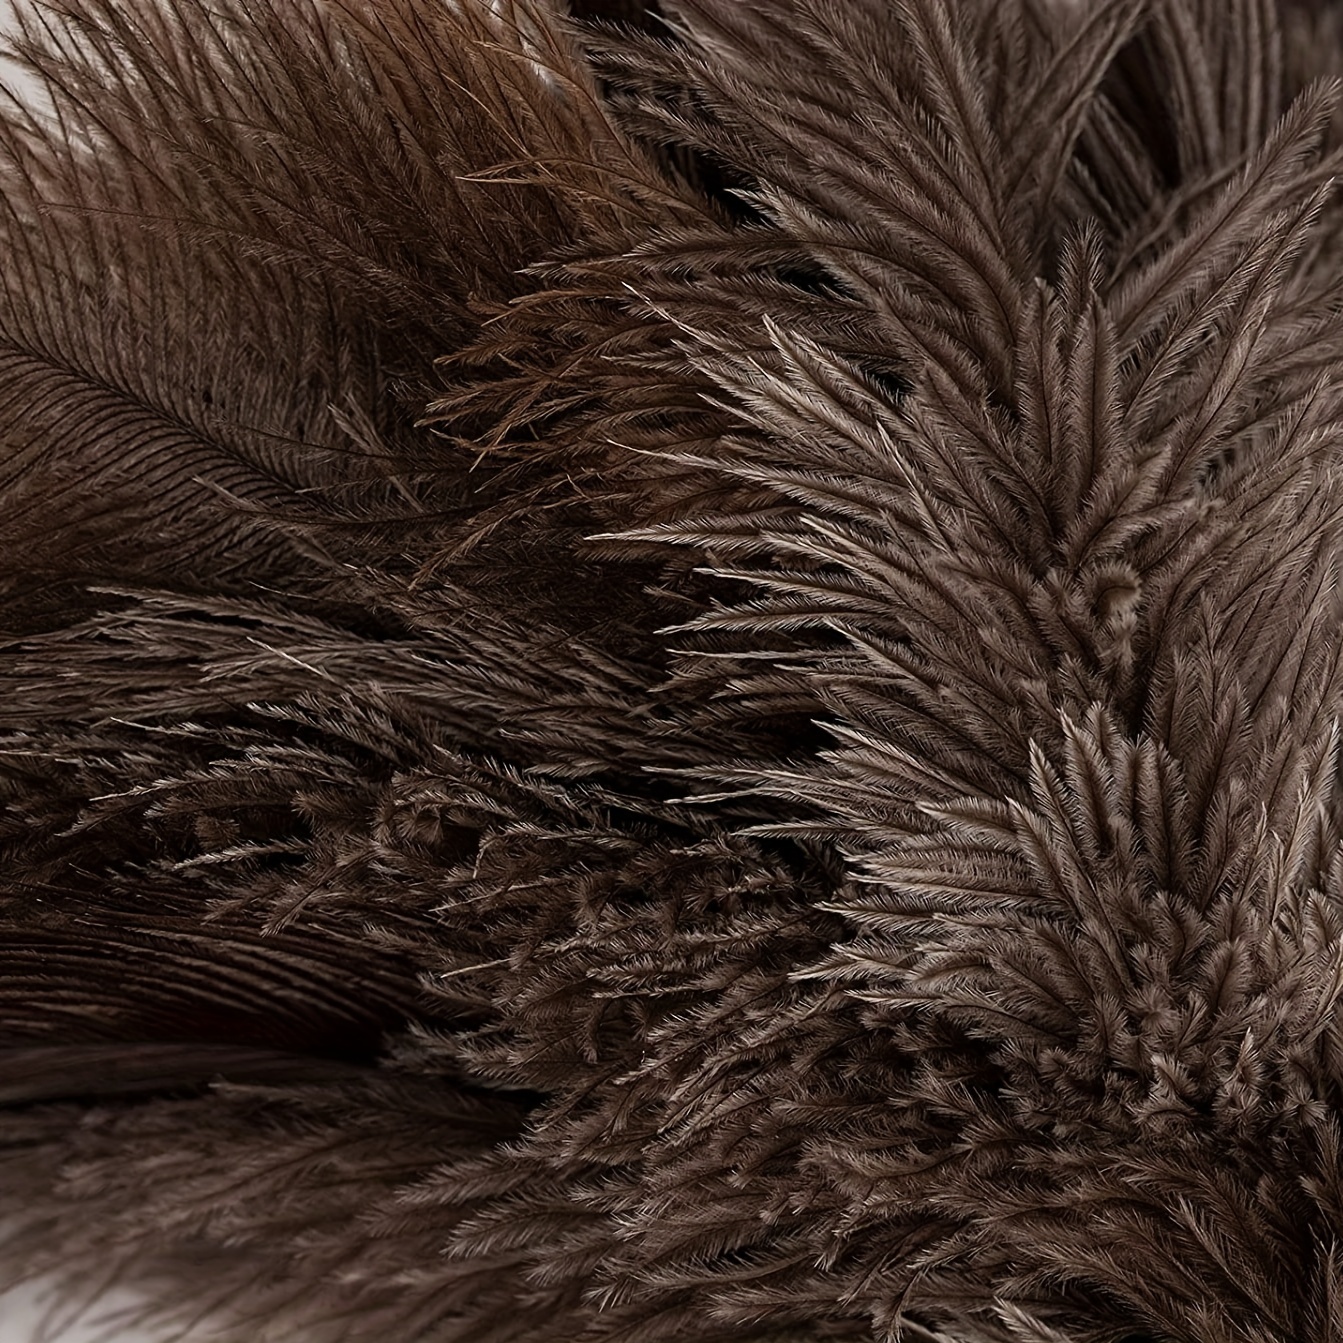 Tradineur - Plumero de plumas de avestruz 70 cm, mango de plástico